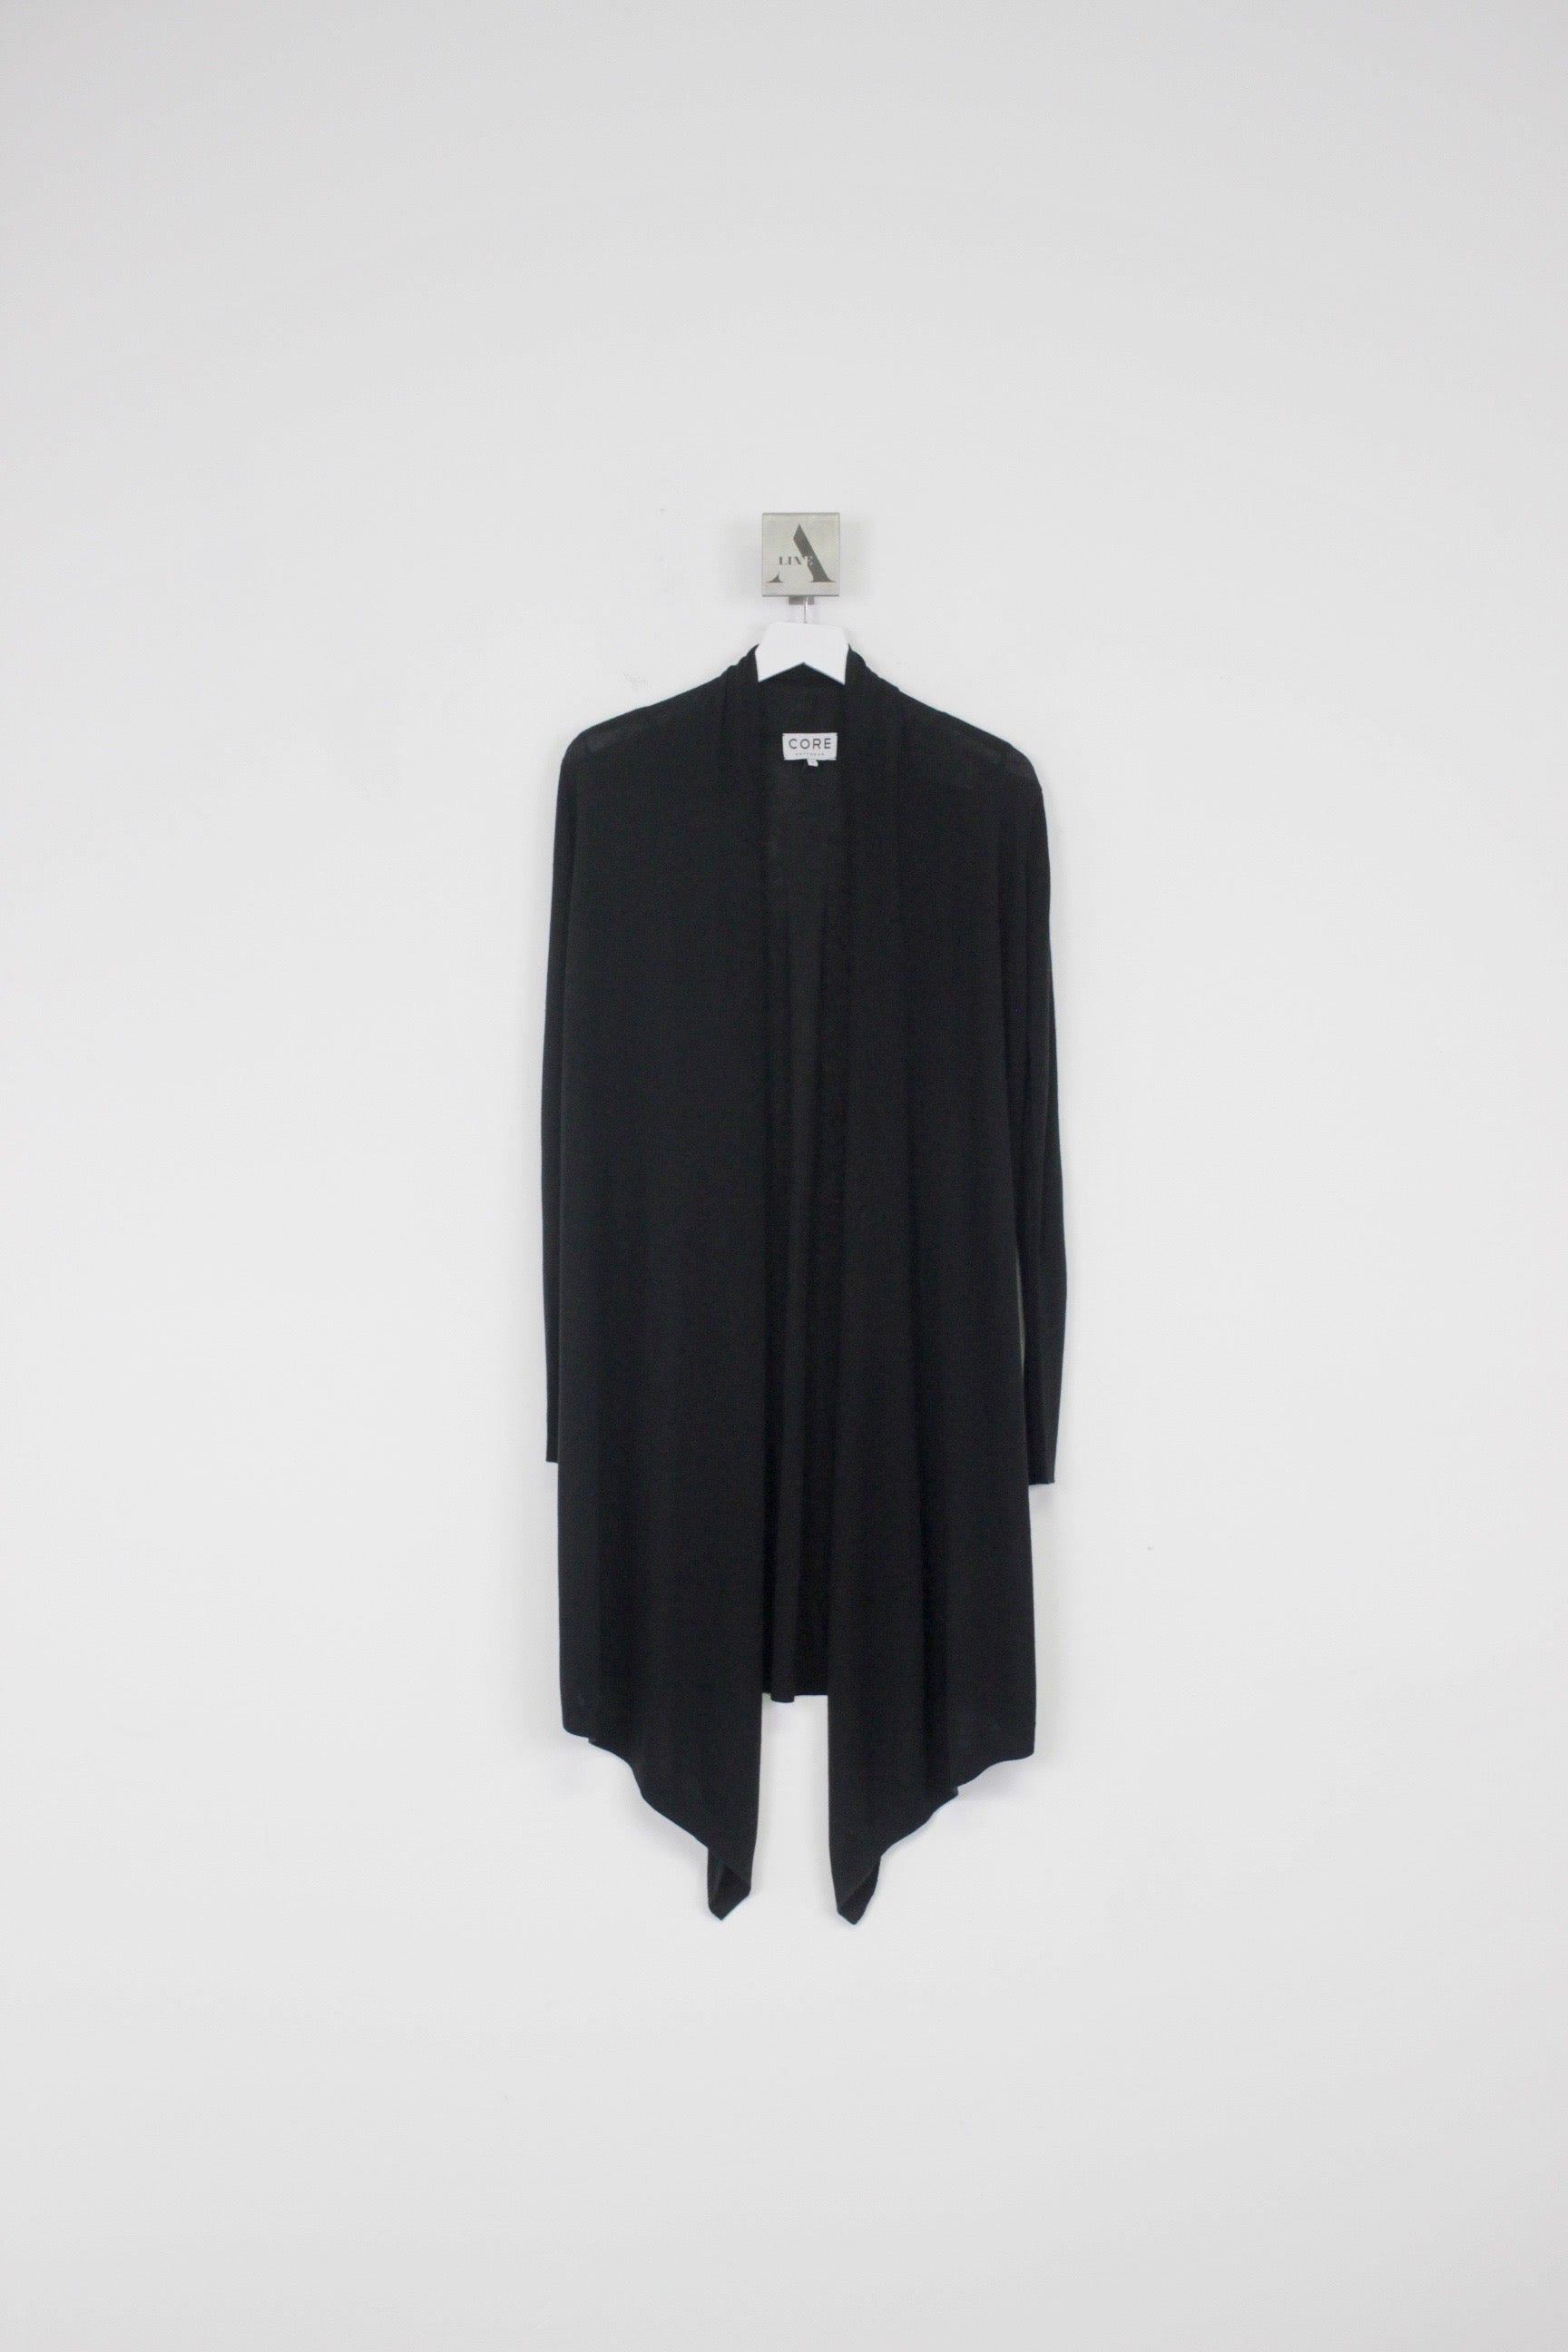 Brand: Ambiance Apparel black knit open front - Depop